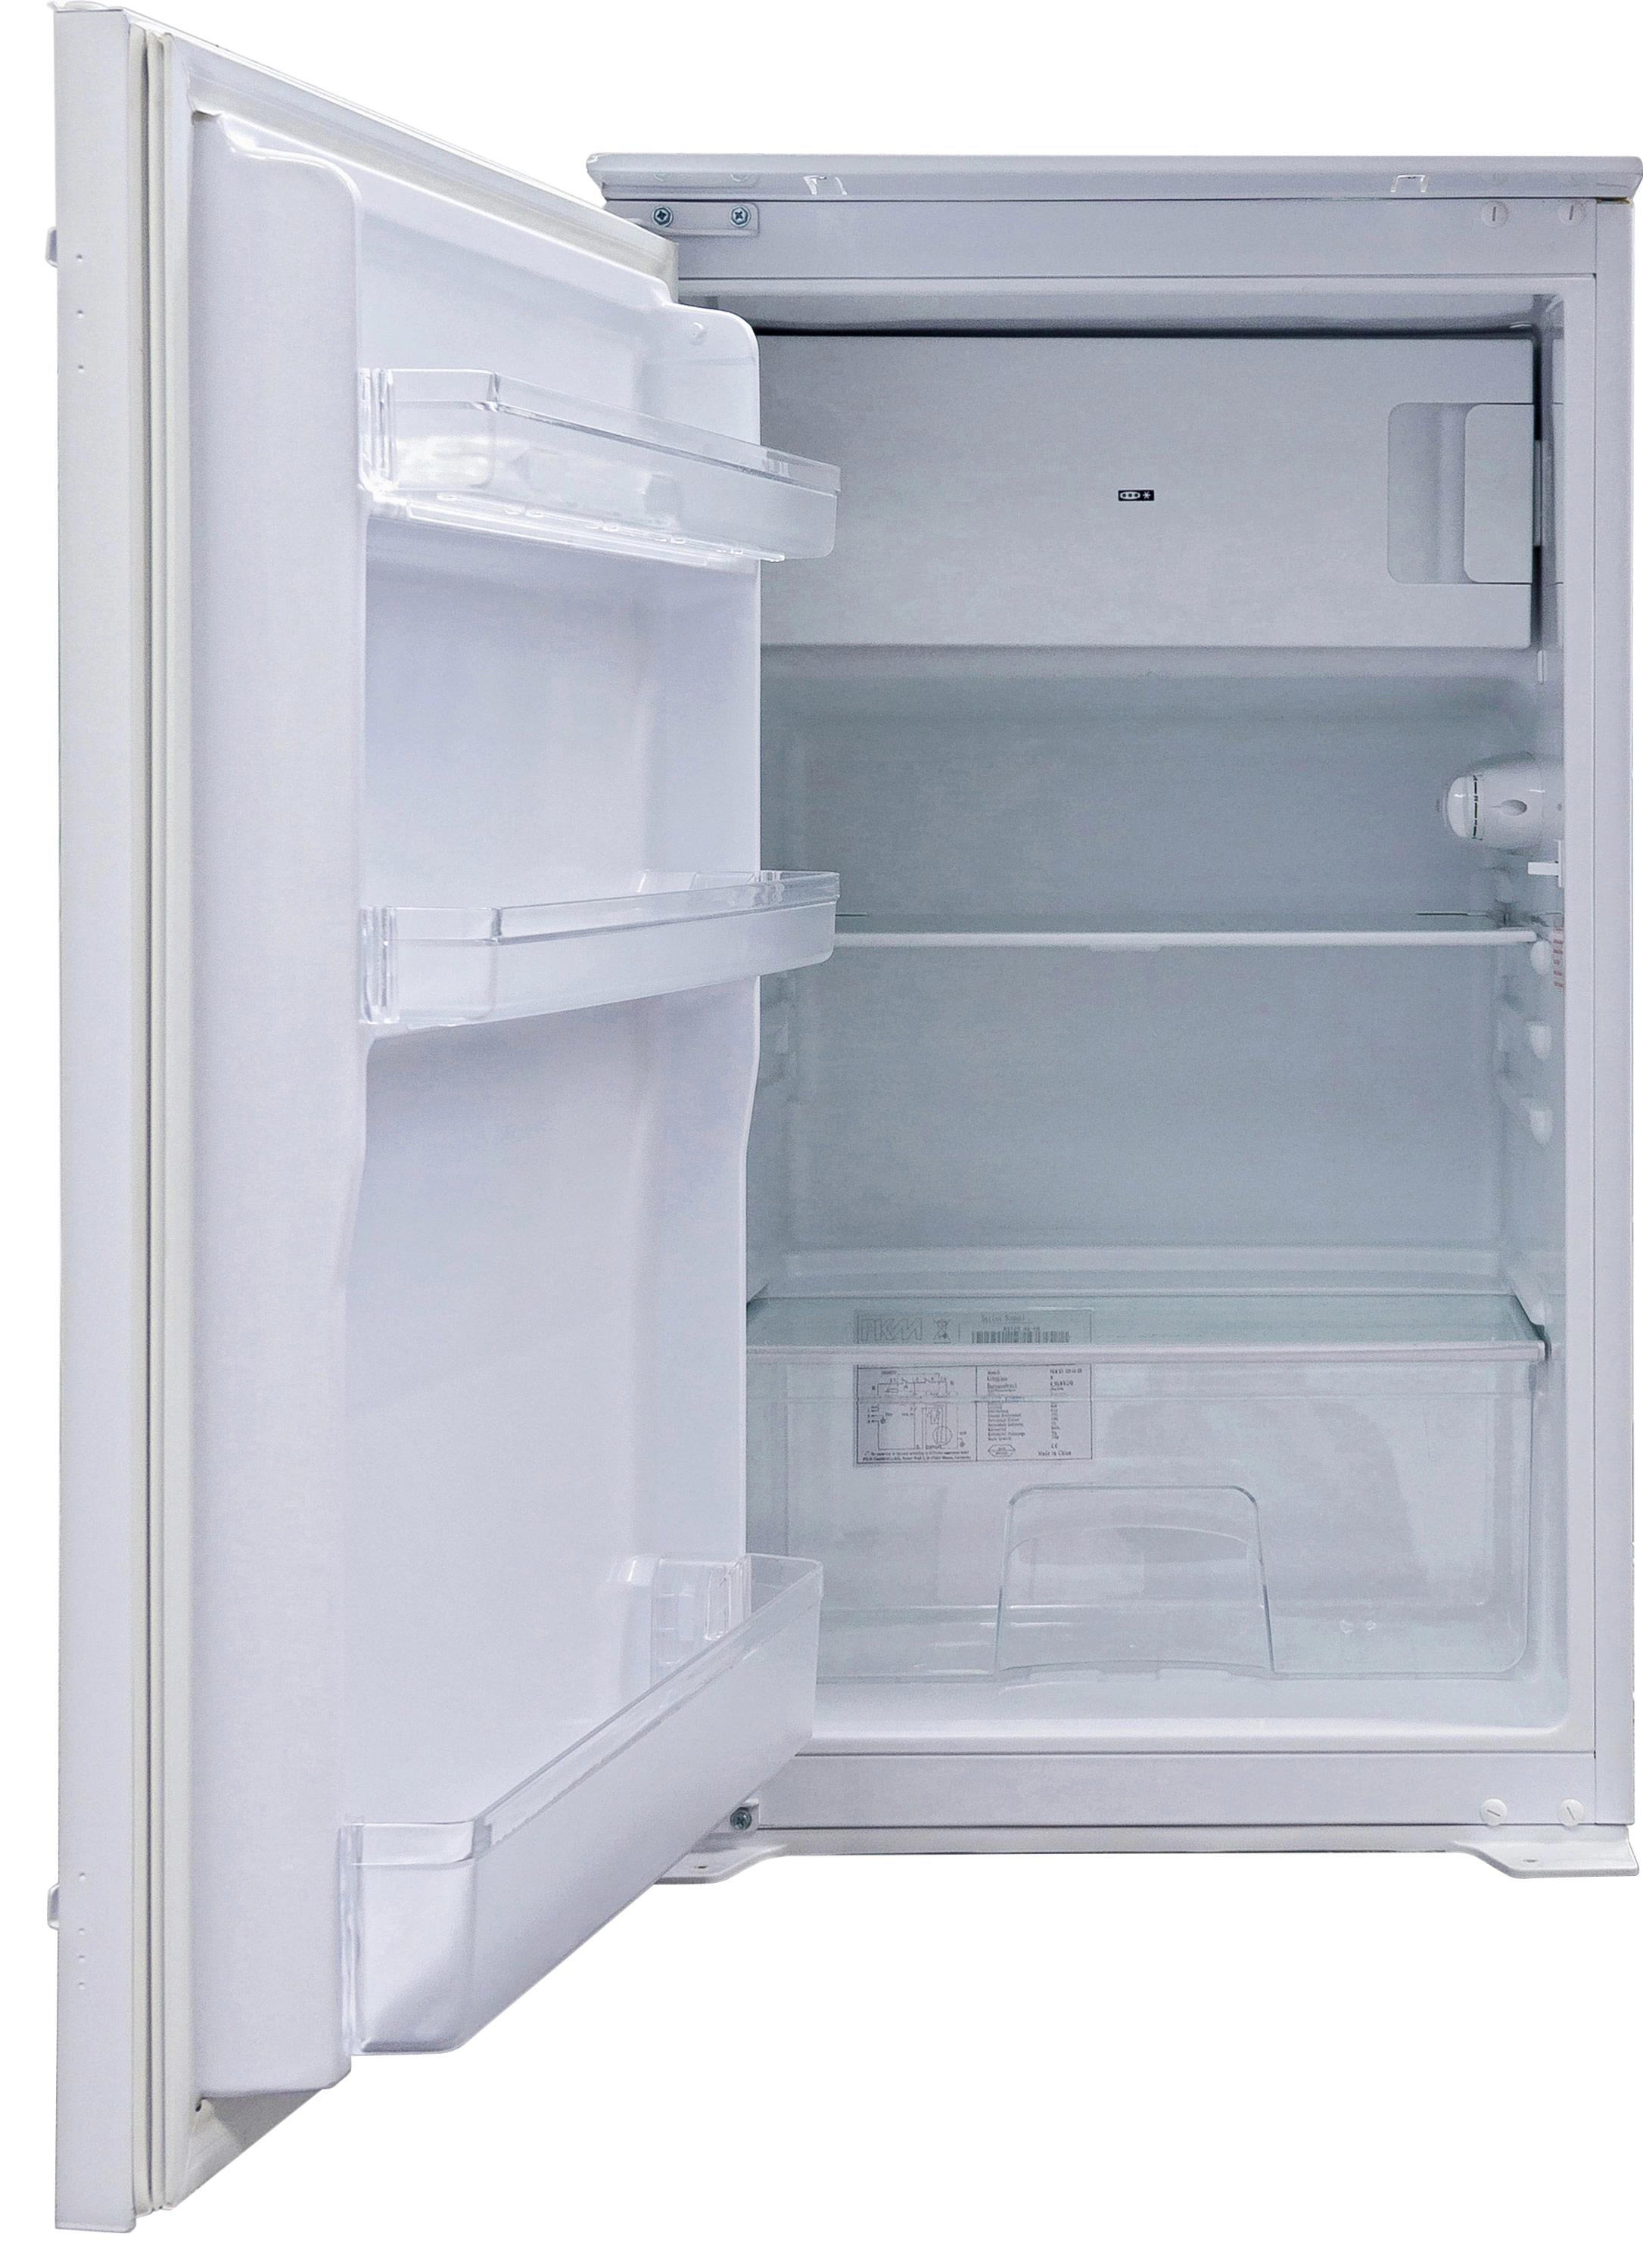 Immer cool bleiben: Basiswissen Kühlschrank